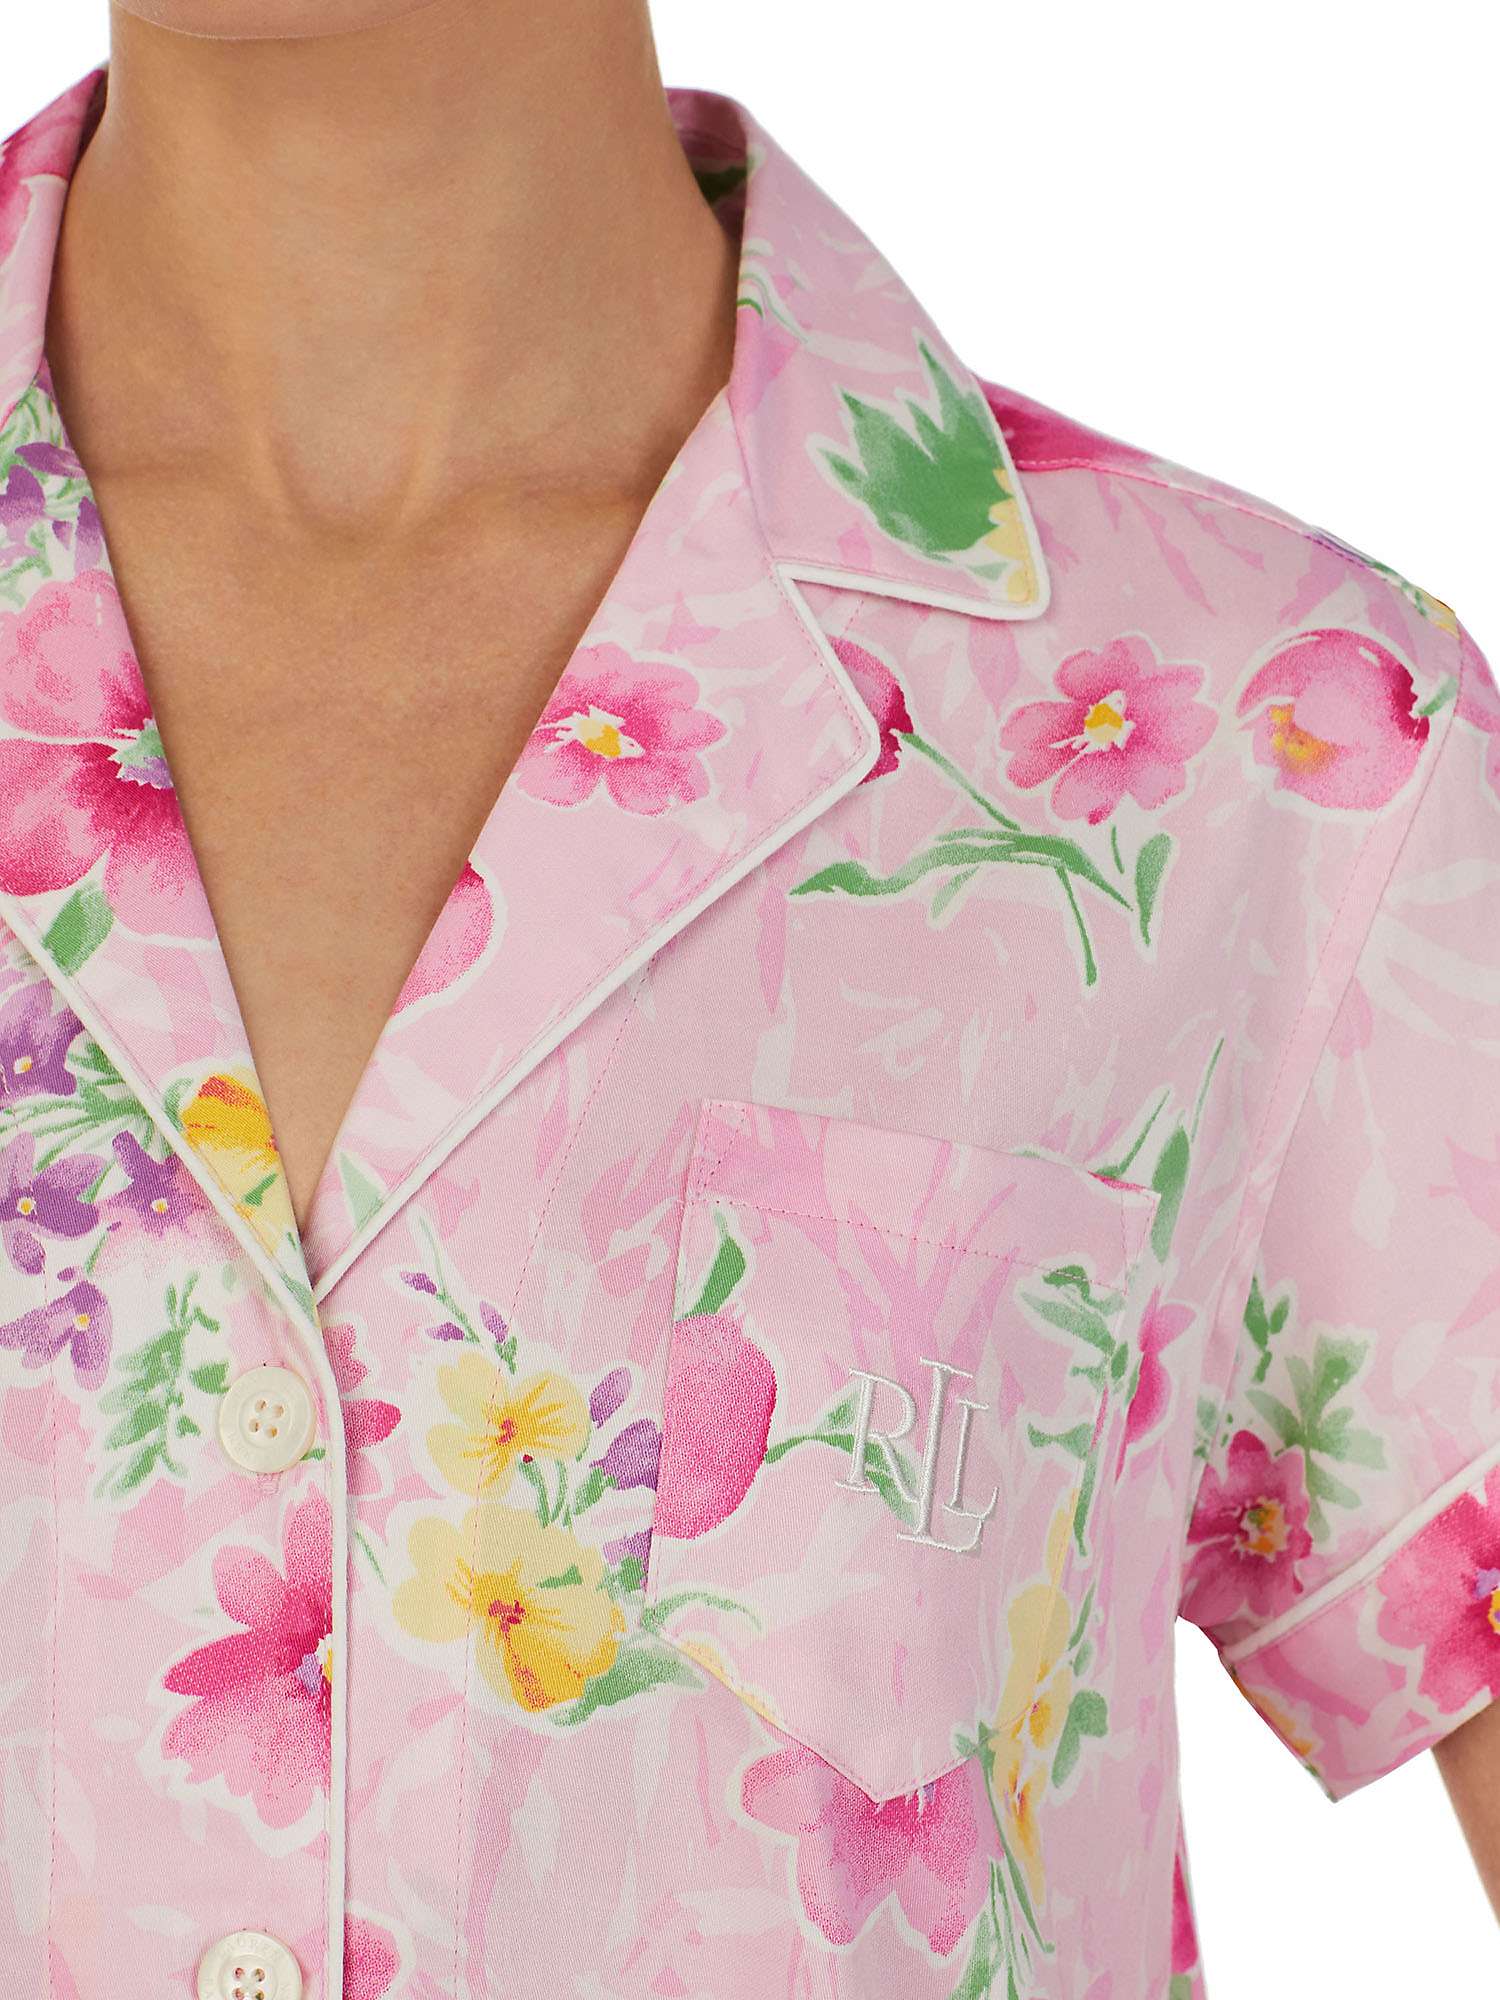 Lauren Ralph Lauren Floral Shorts Pyjamas, Pink/Multi at John Lewis ...